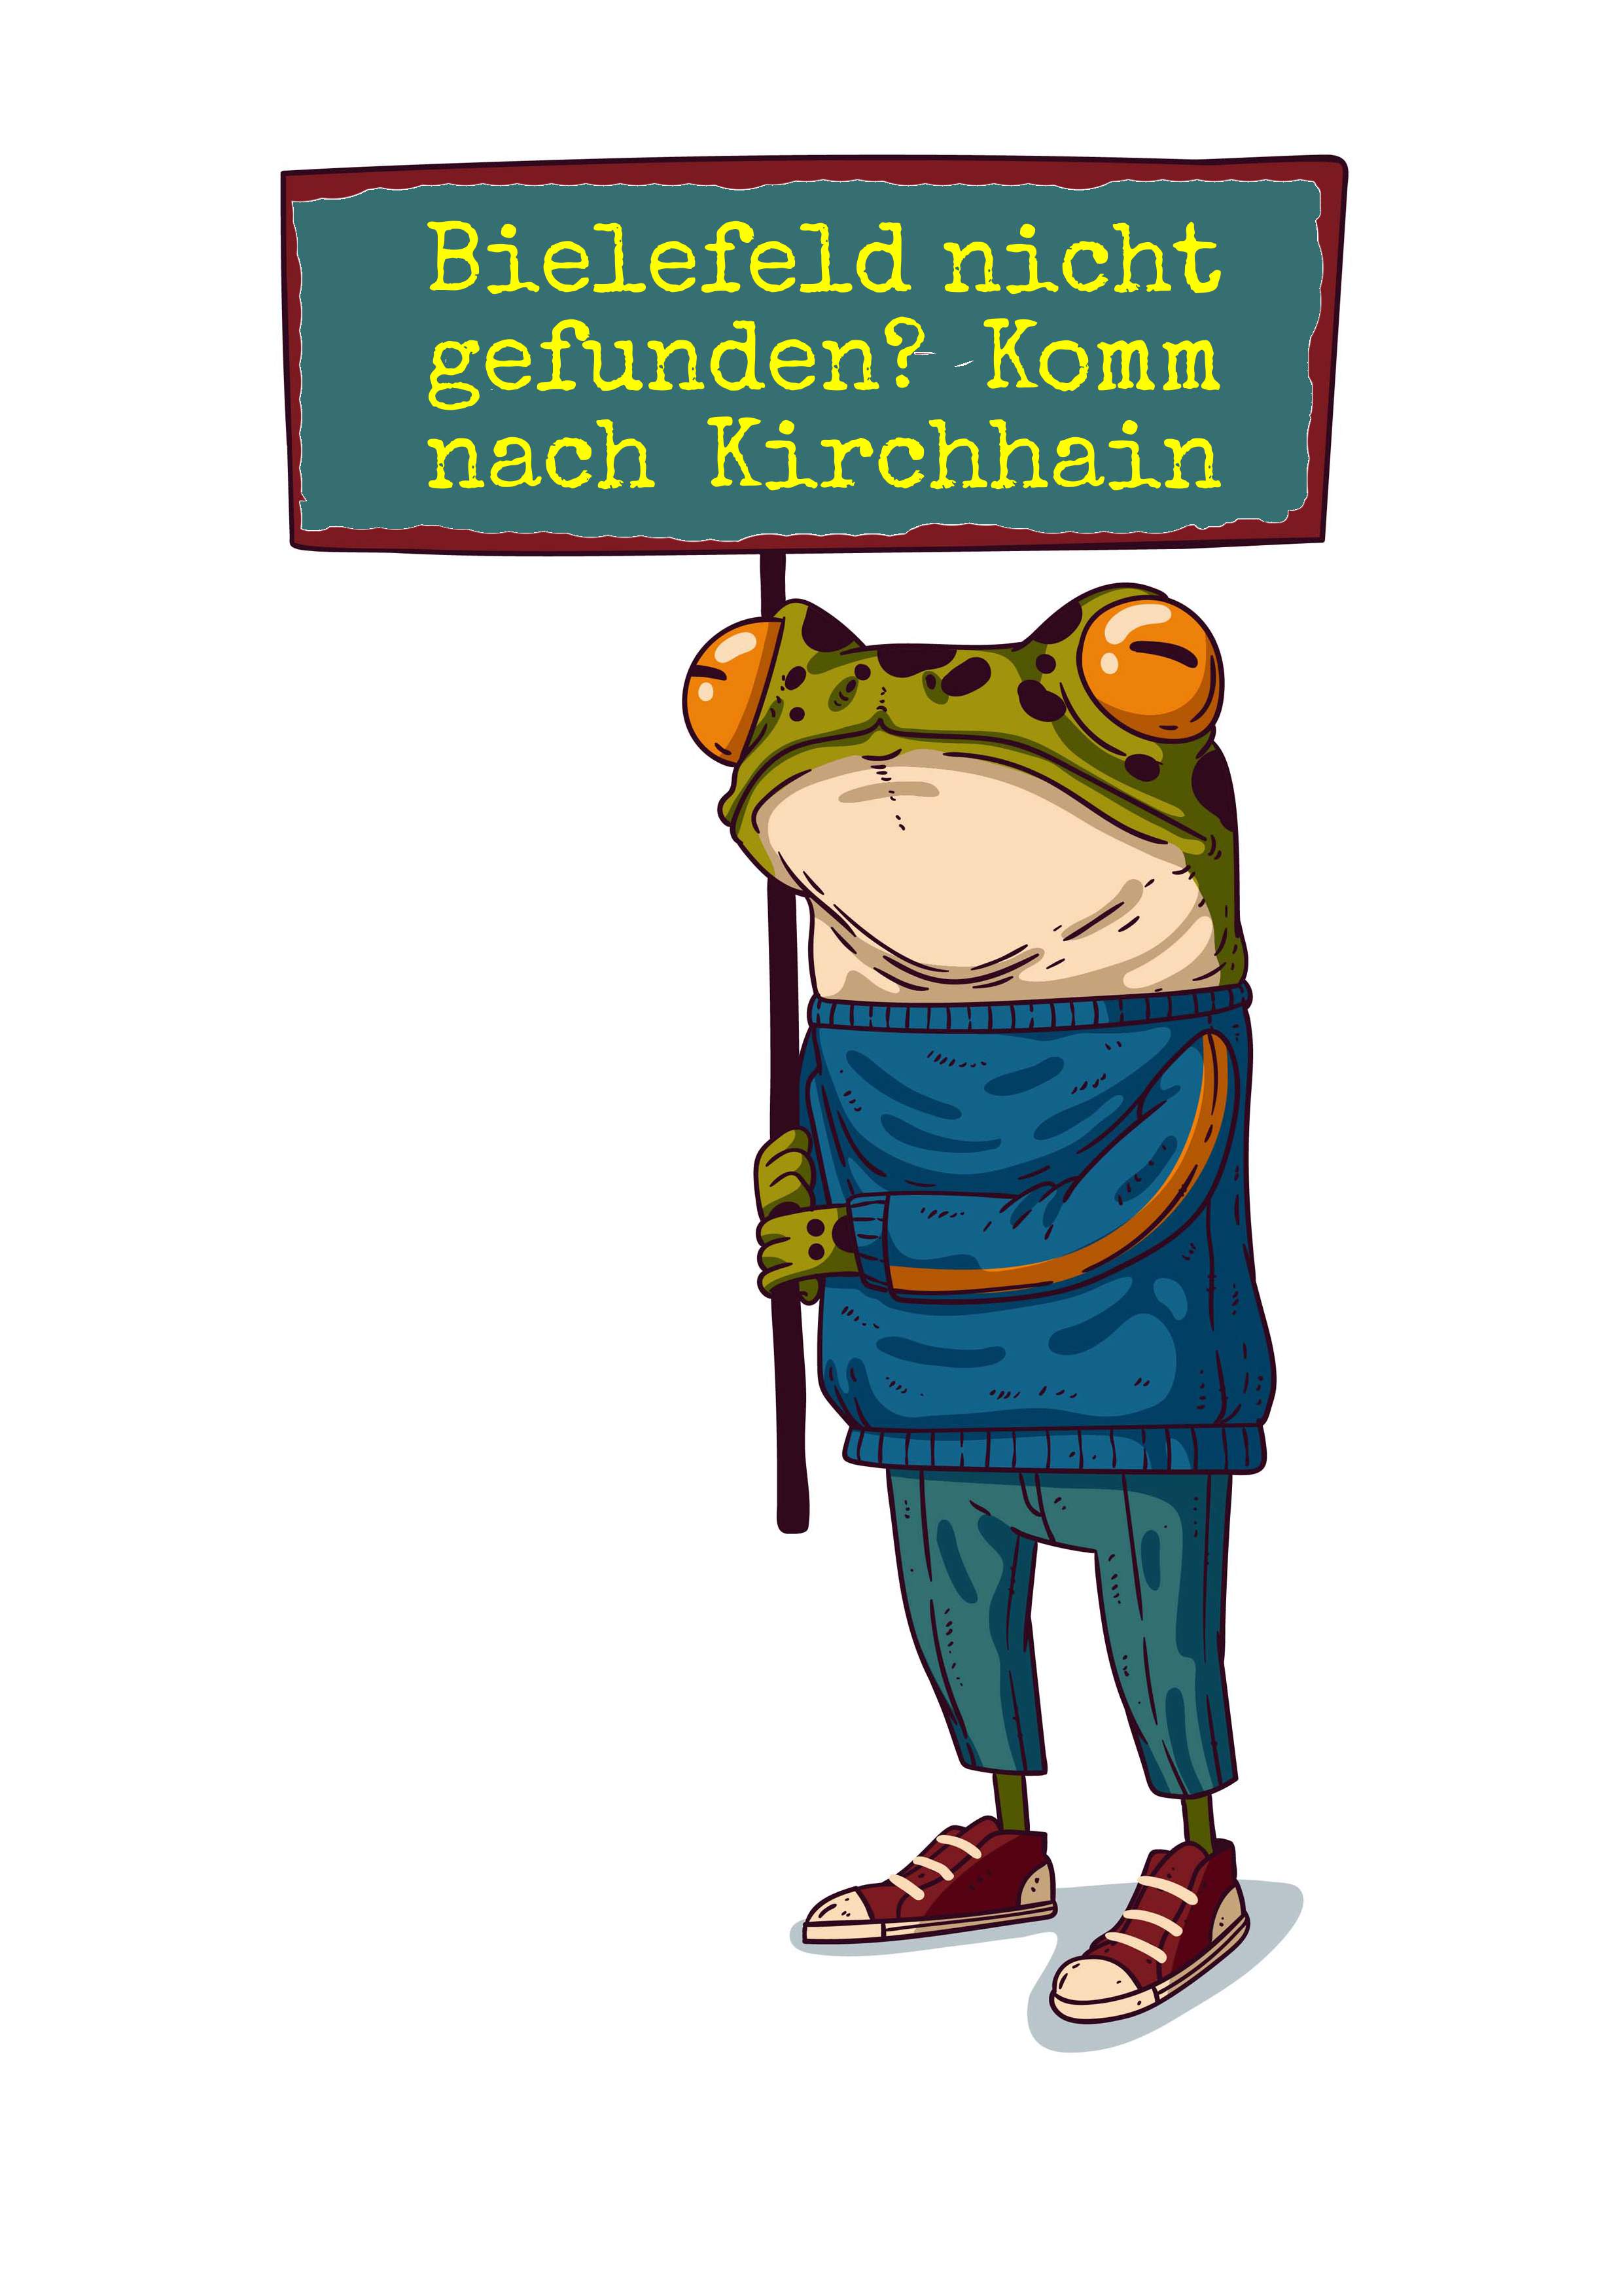 komm nach Kirchhain